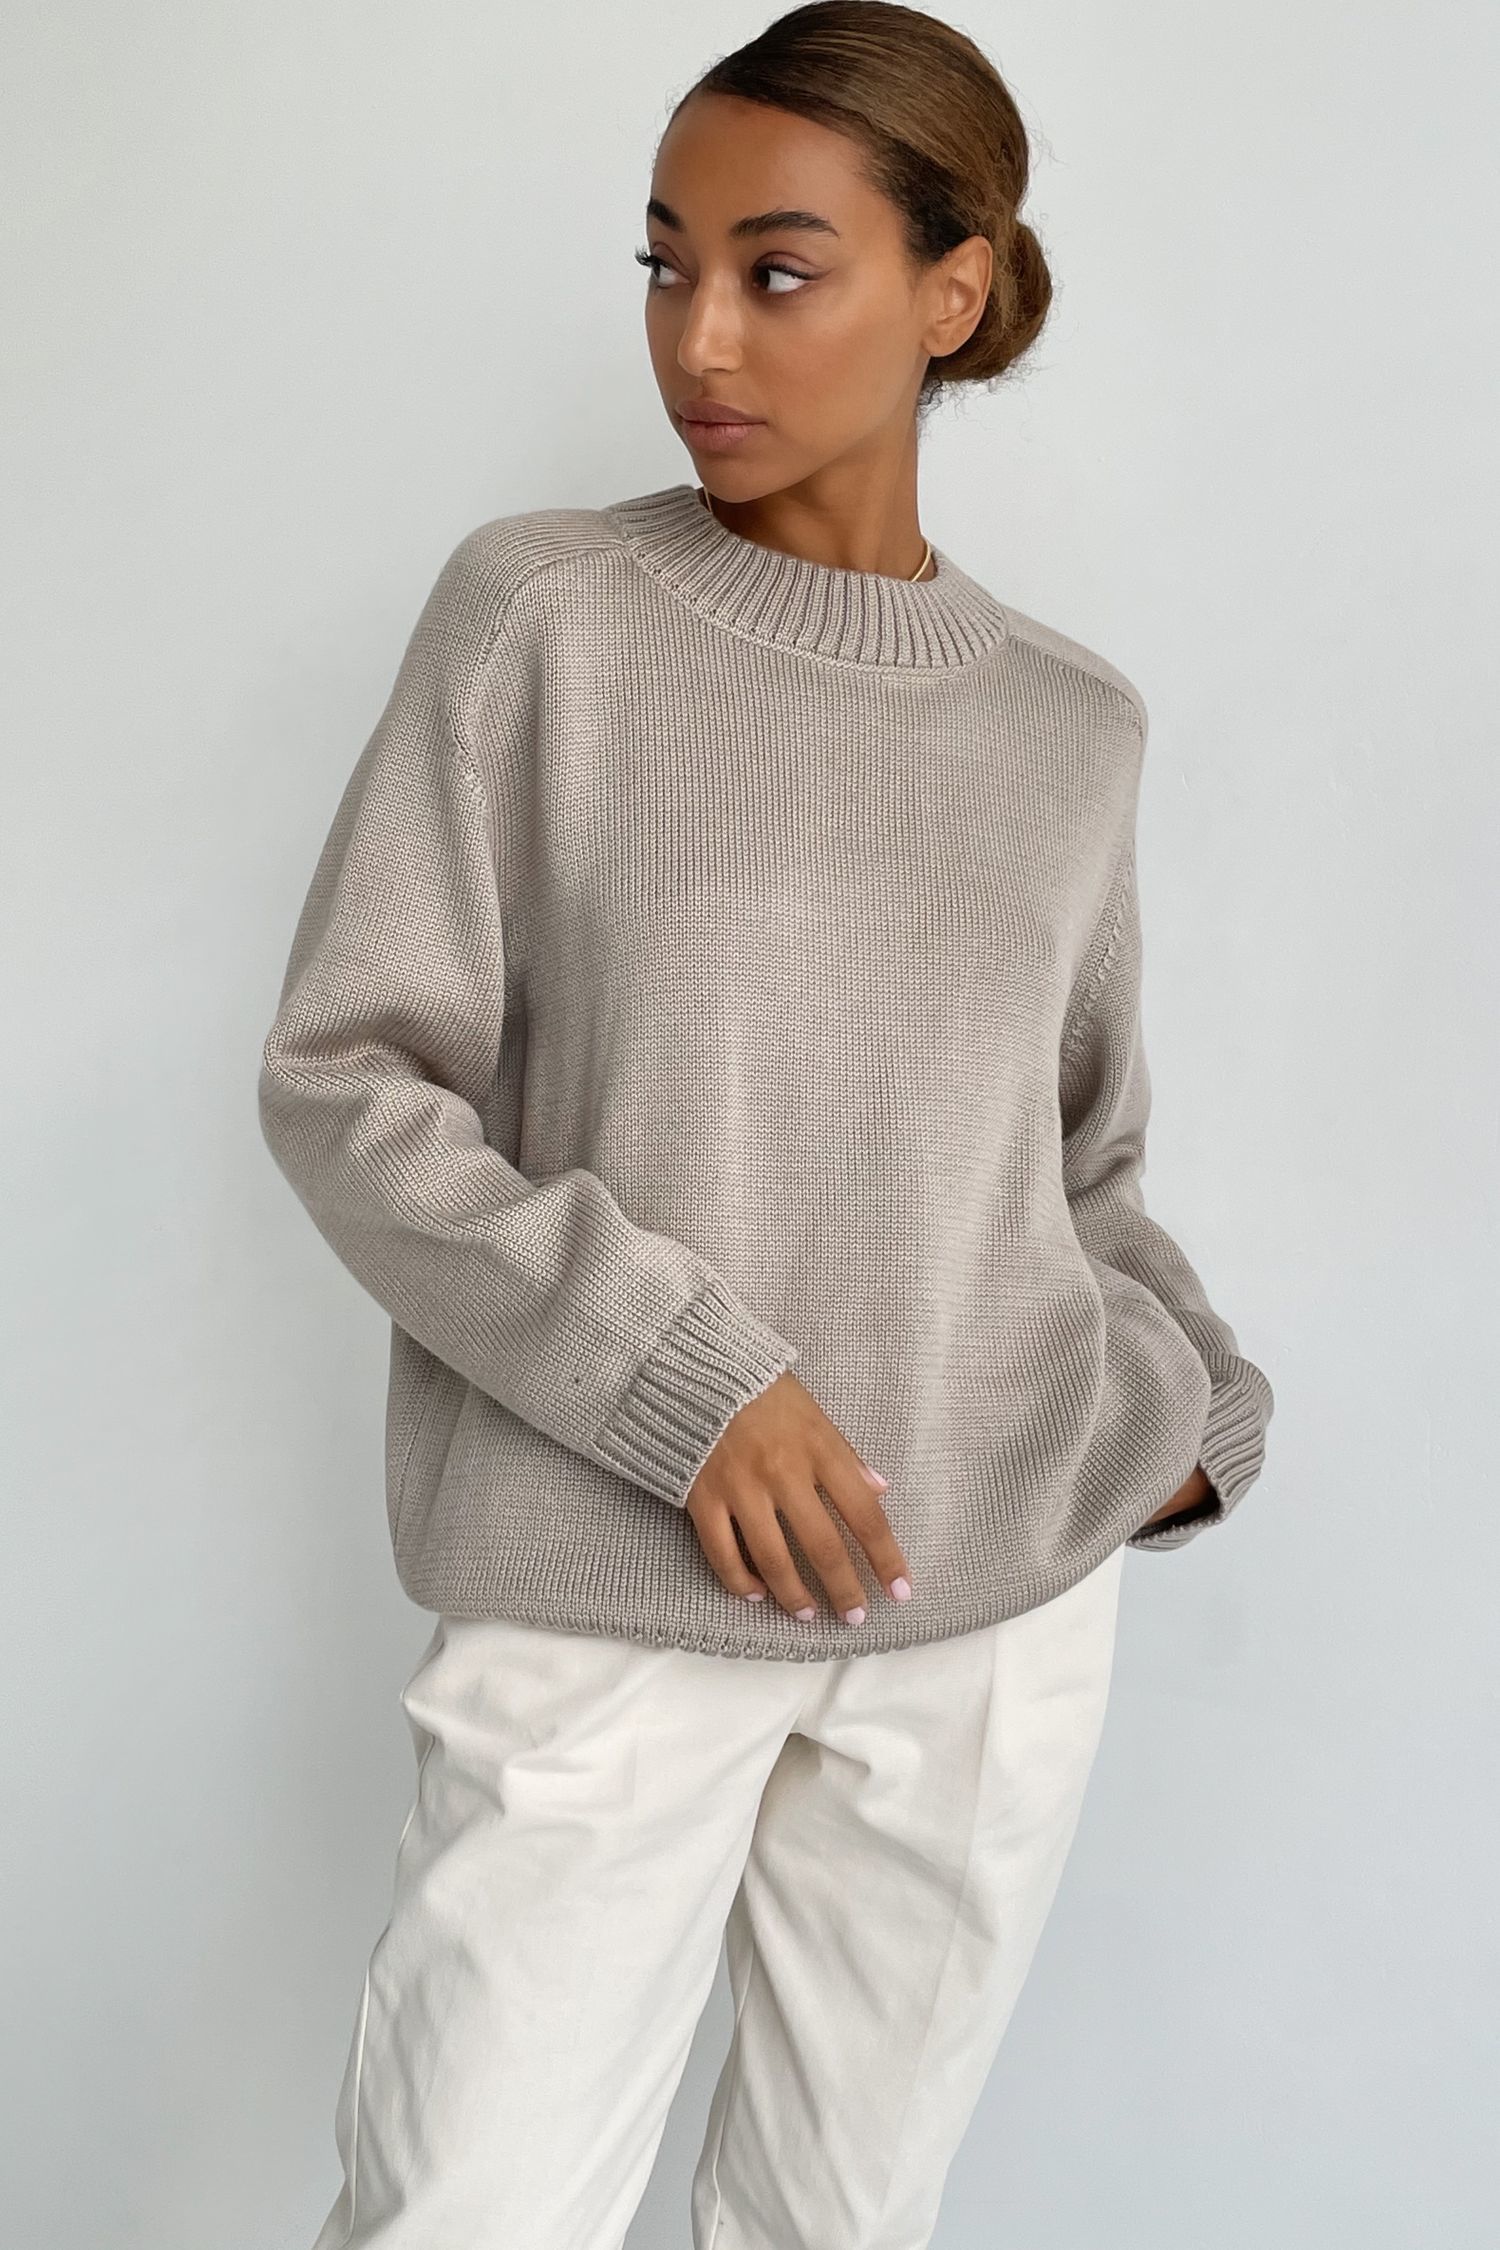 Wool blend straight fit sweater in beige